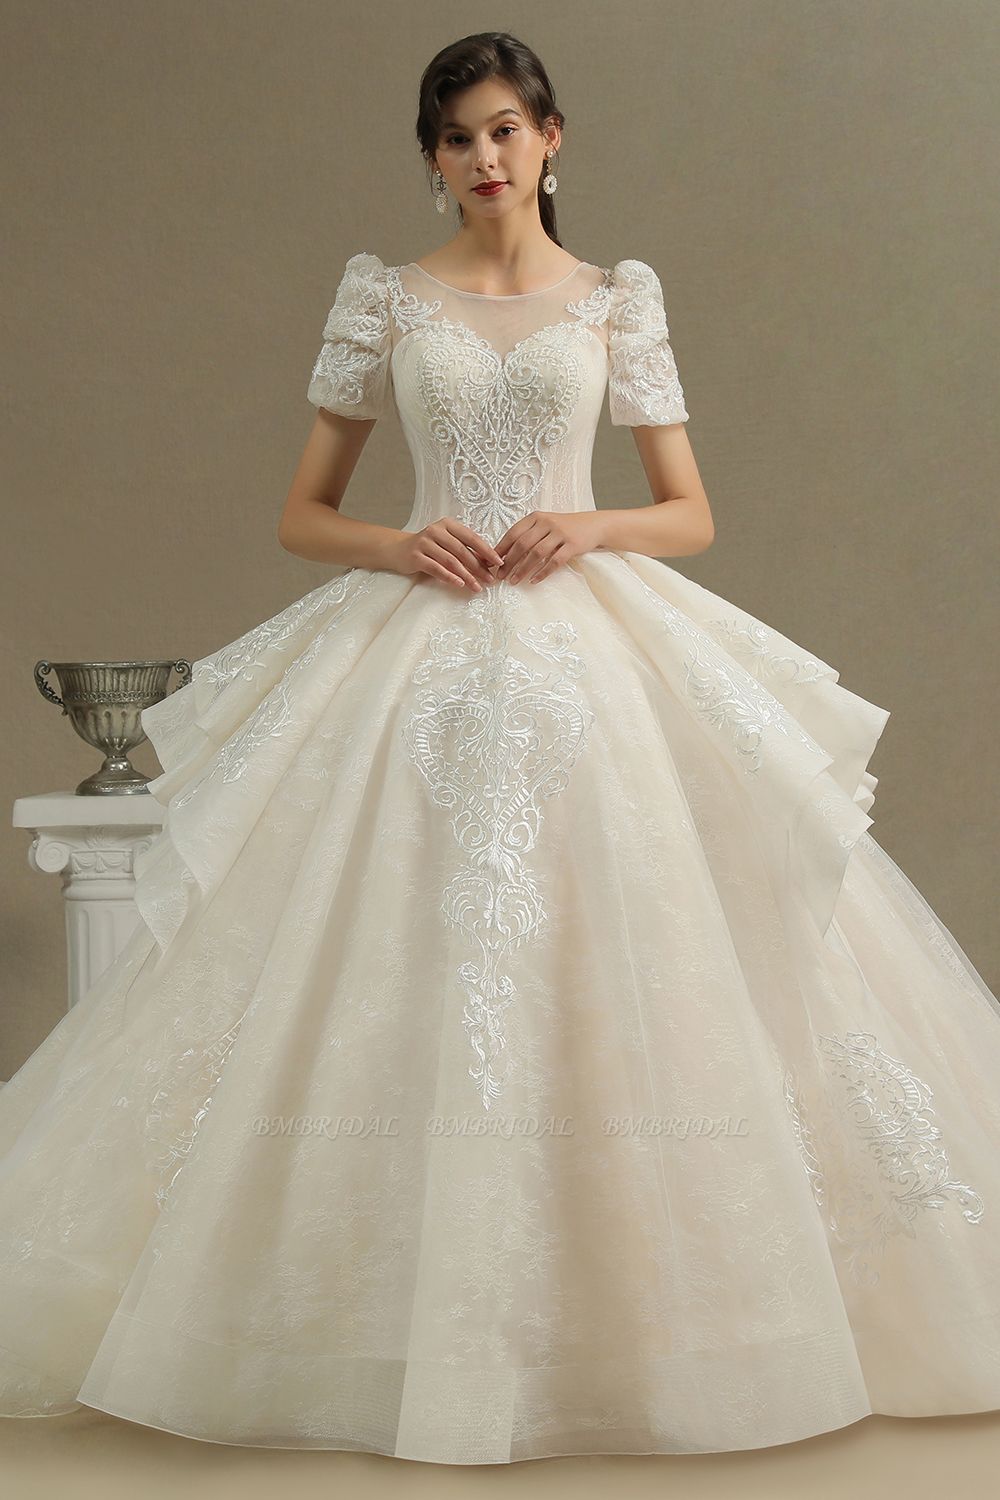 BMbridal Glamorous Short Sleeve Lace Ball Gown Wedding Dress